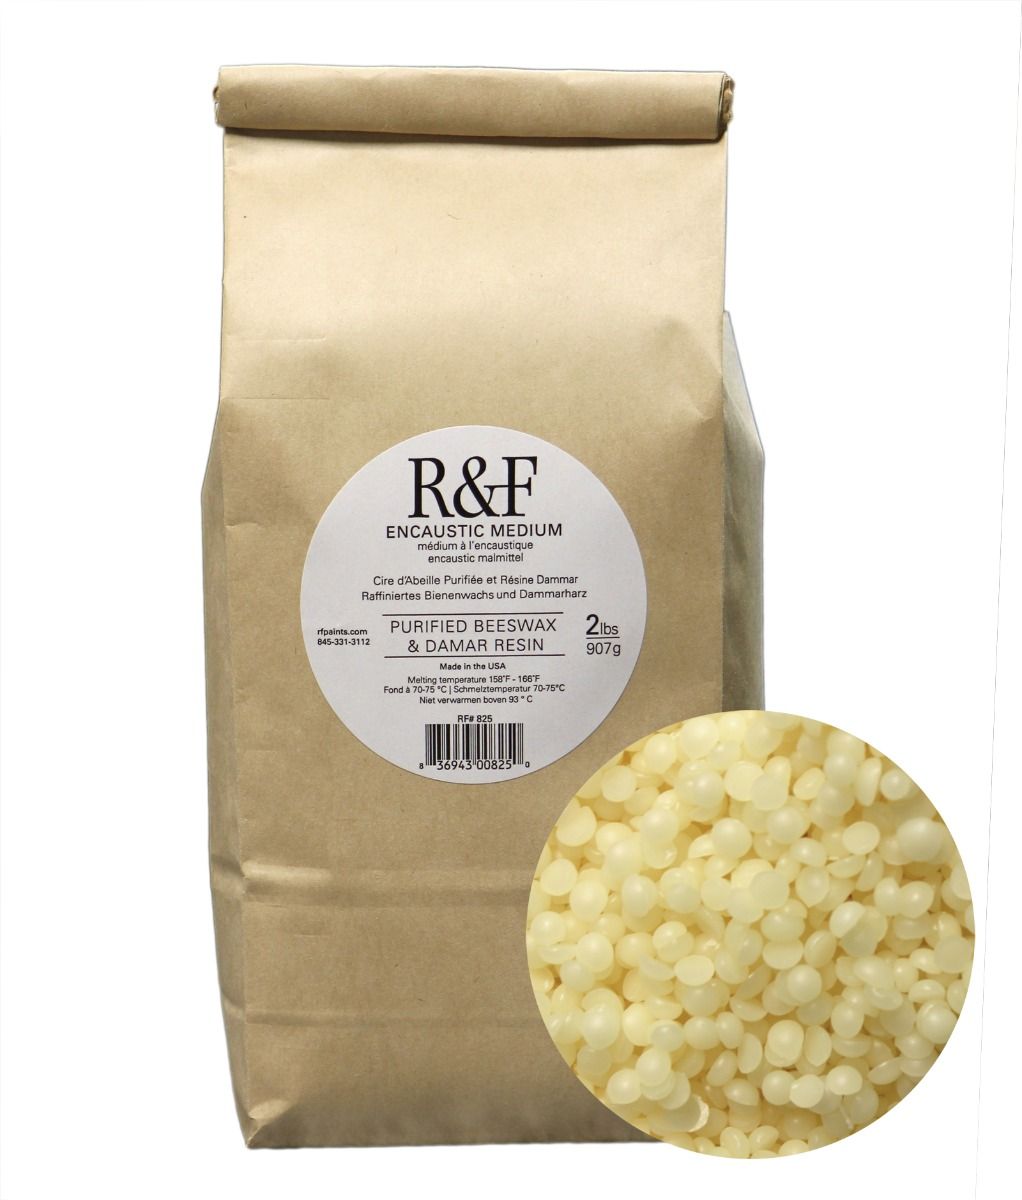 R&F Encaustic Purified Beeswax & Damar Resin Medium 2lb (907g) bag